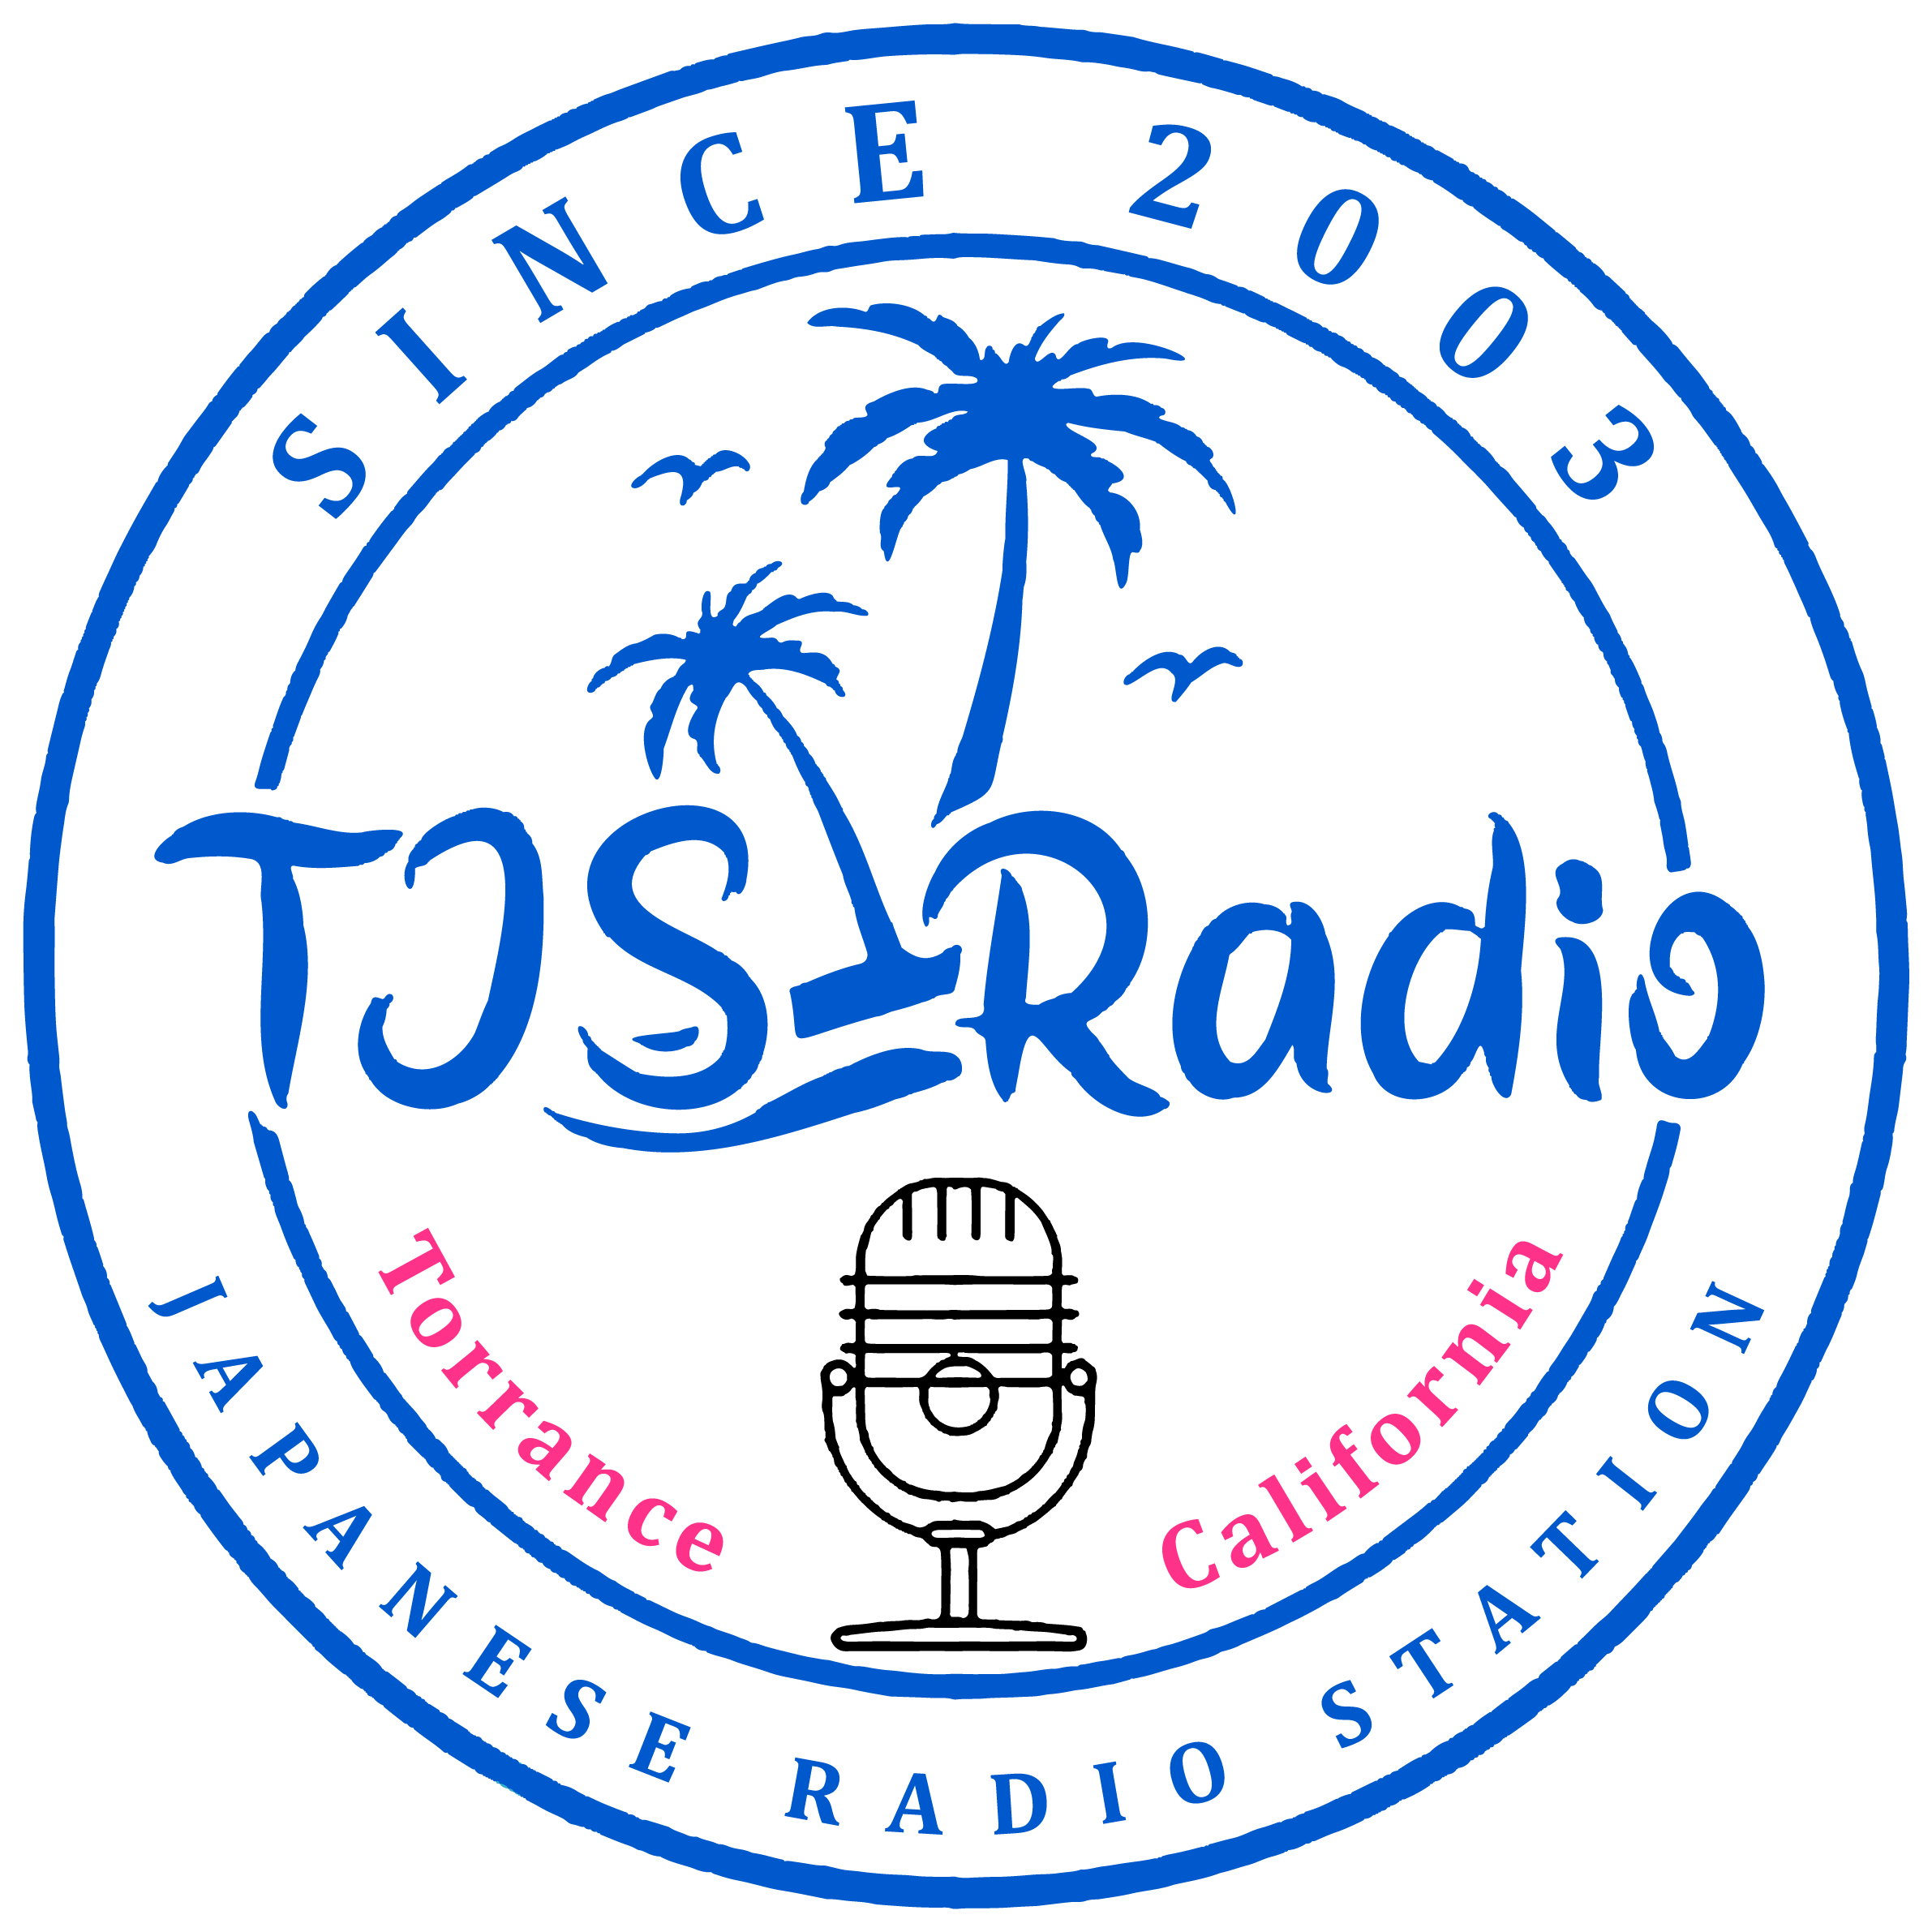 TJS Radio from Torrance California